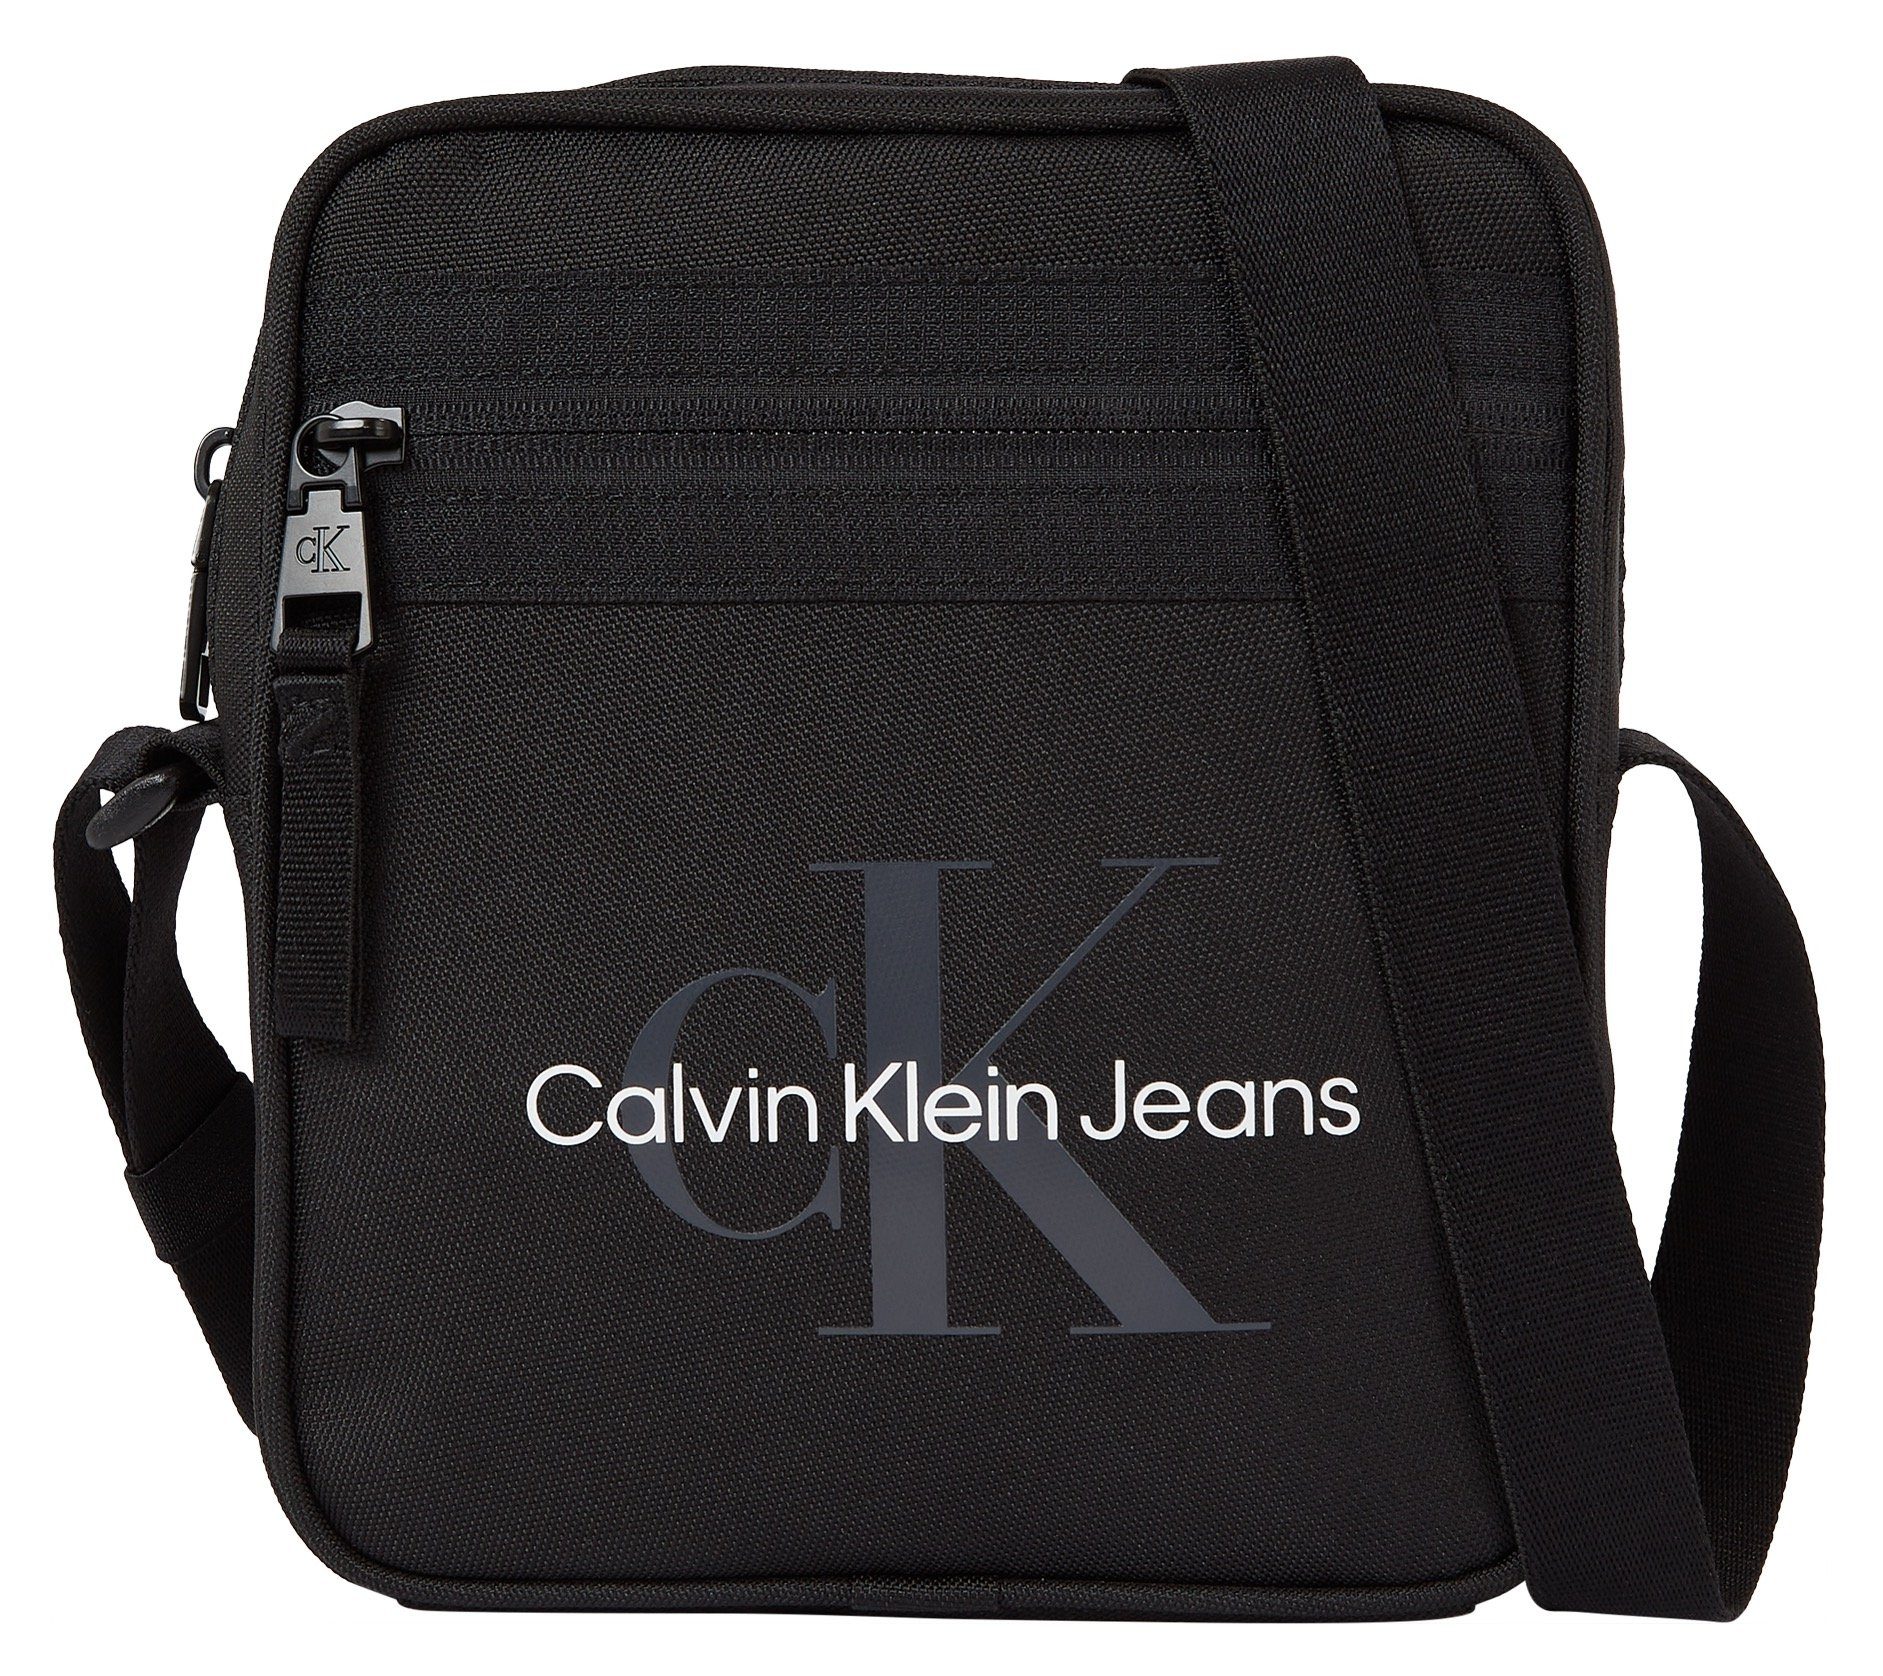 SPORT Bag REPORTER18 Klein M Jeans Mini Calvin ESSENTIALS